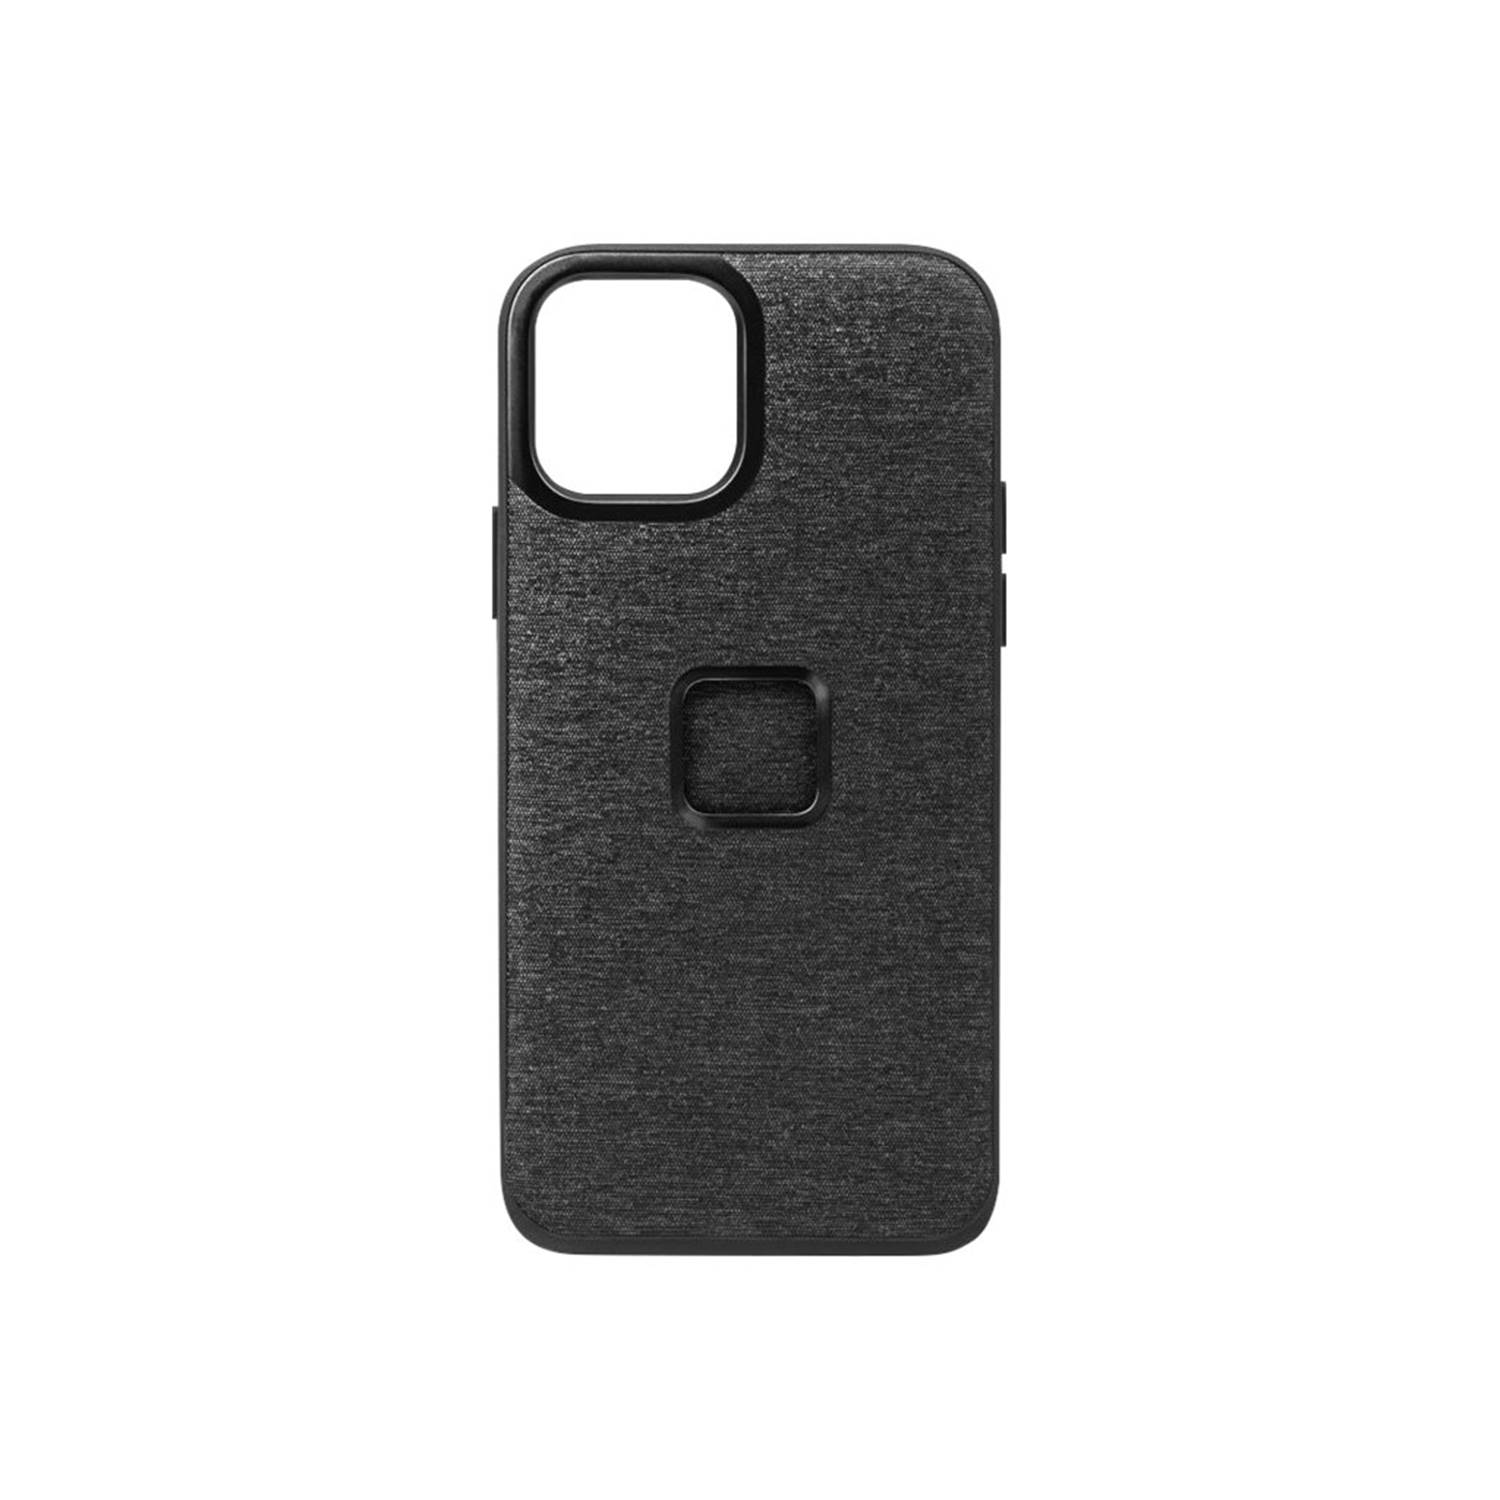 Peak Design Everyday Fabric Case iPhone 12 - Charcoal